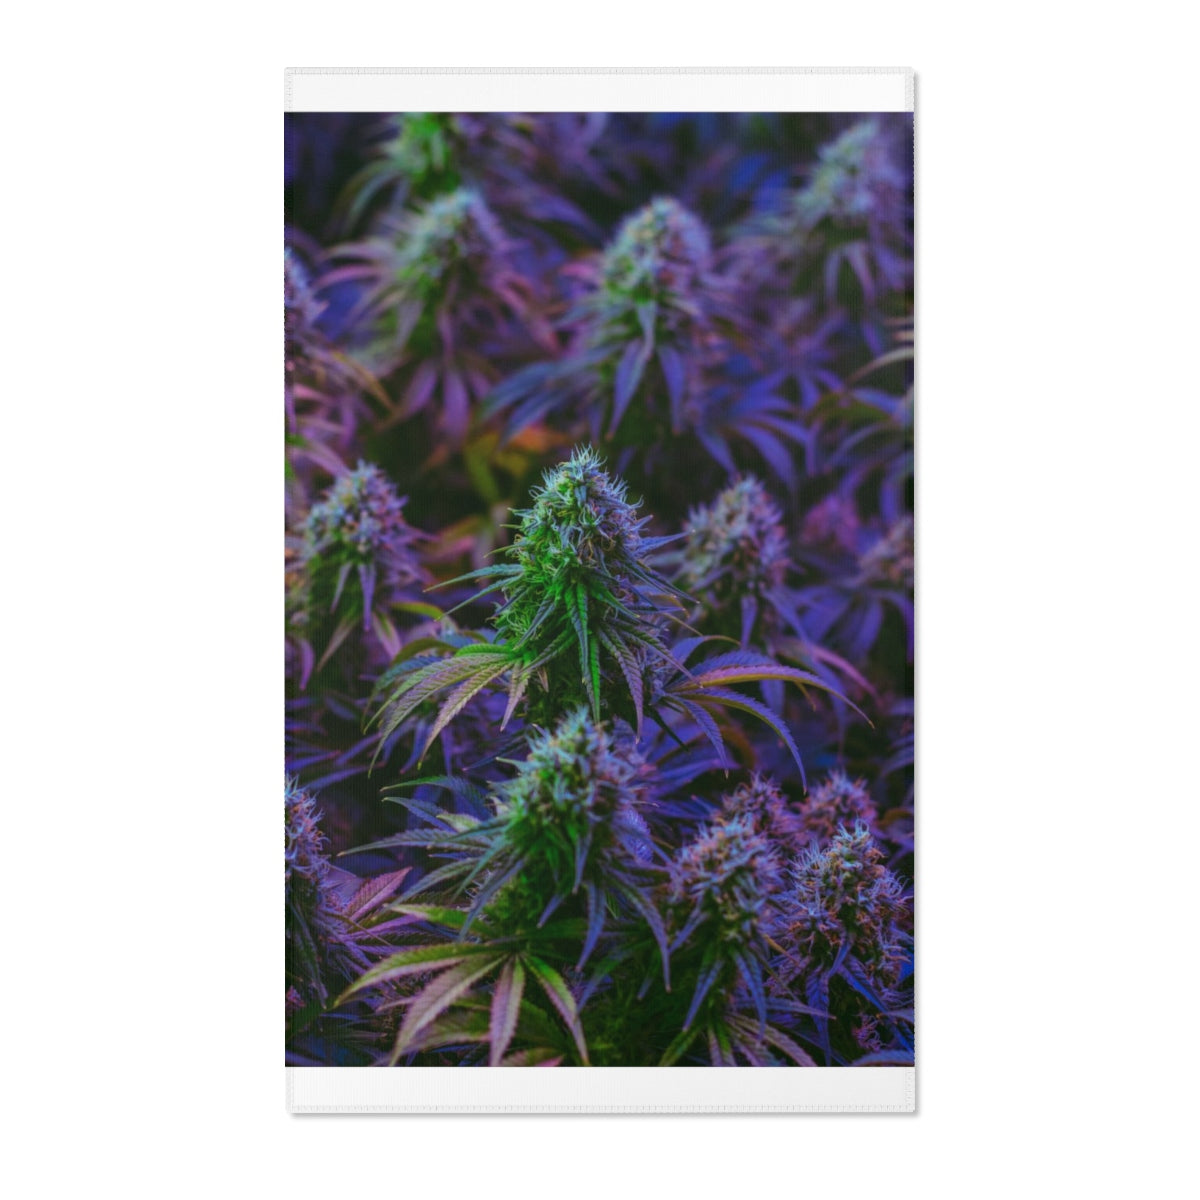 The Purple Cannabis Area Rugs